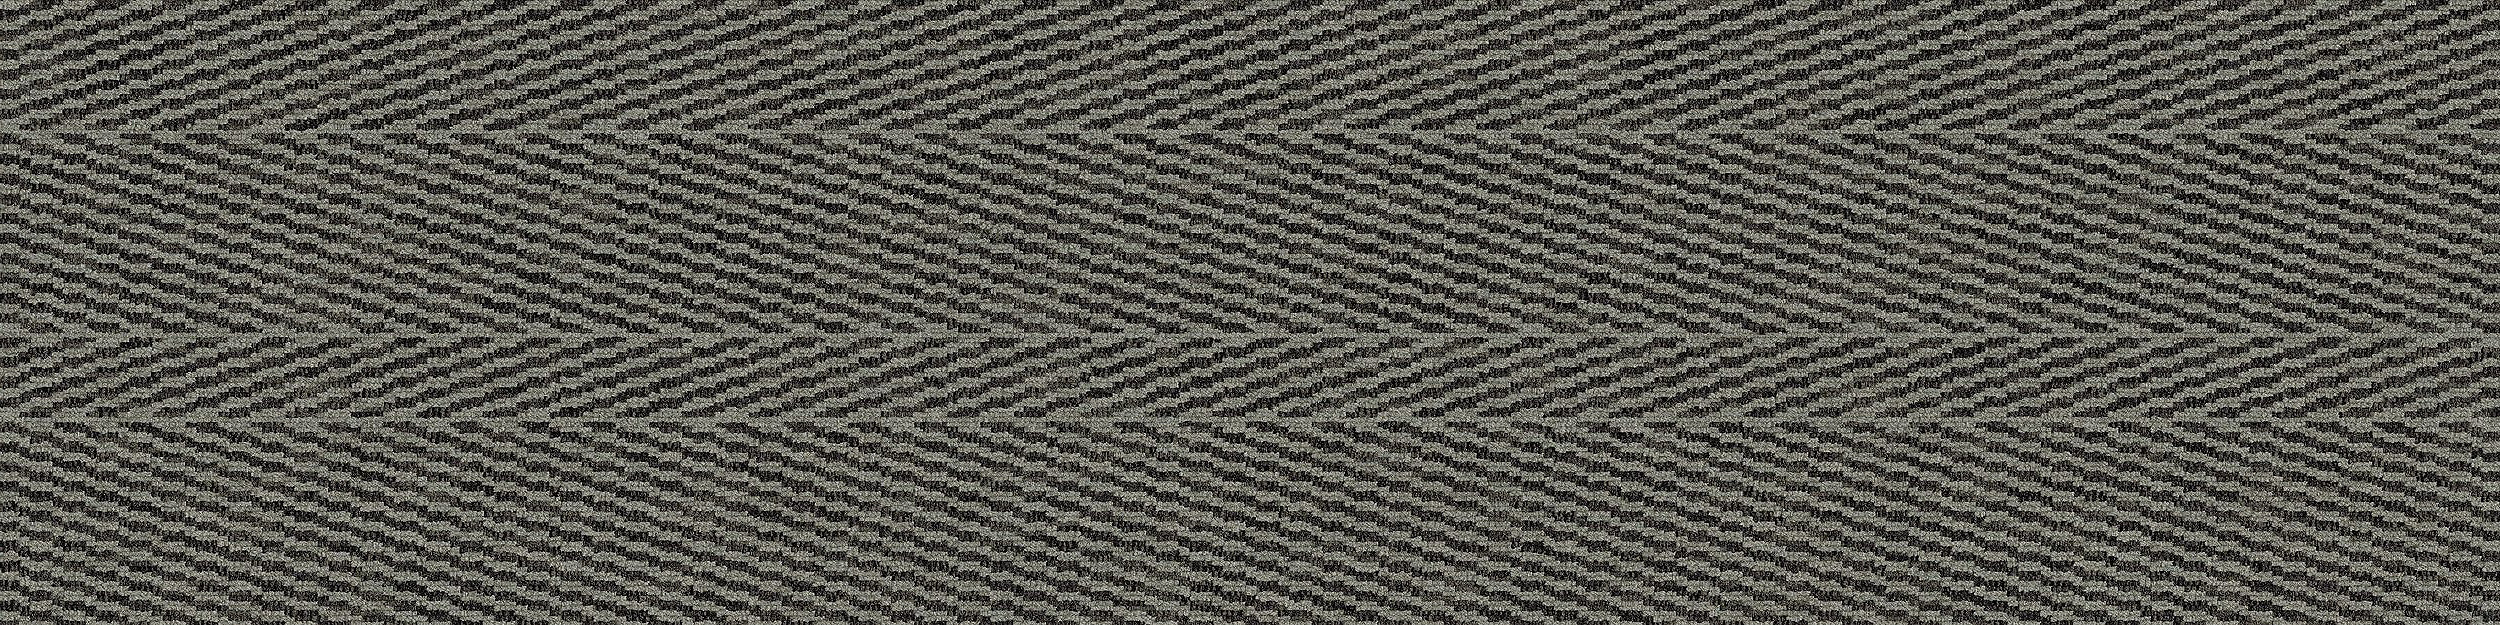 Stitch In Time Carpet Tile In Flannel Stitch imagen número 6